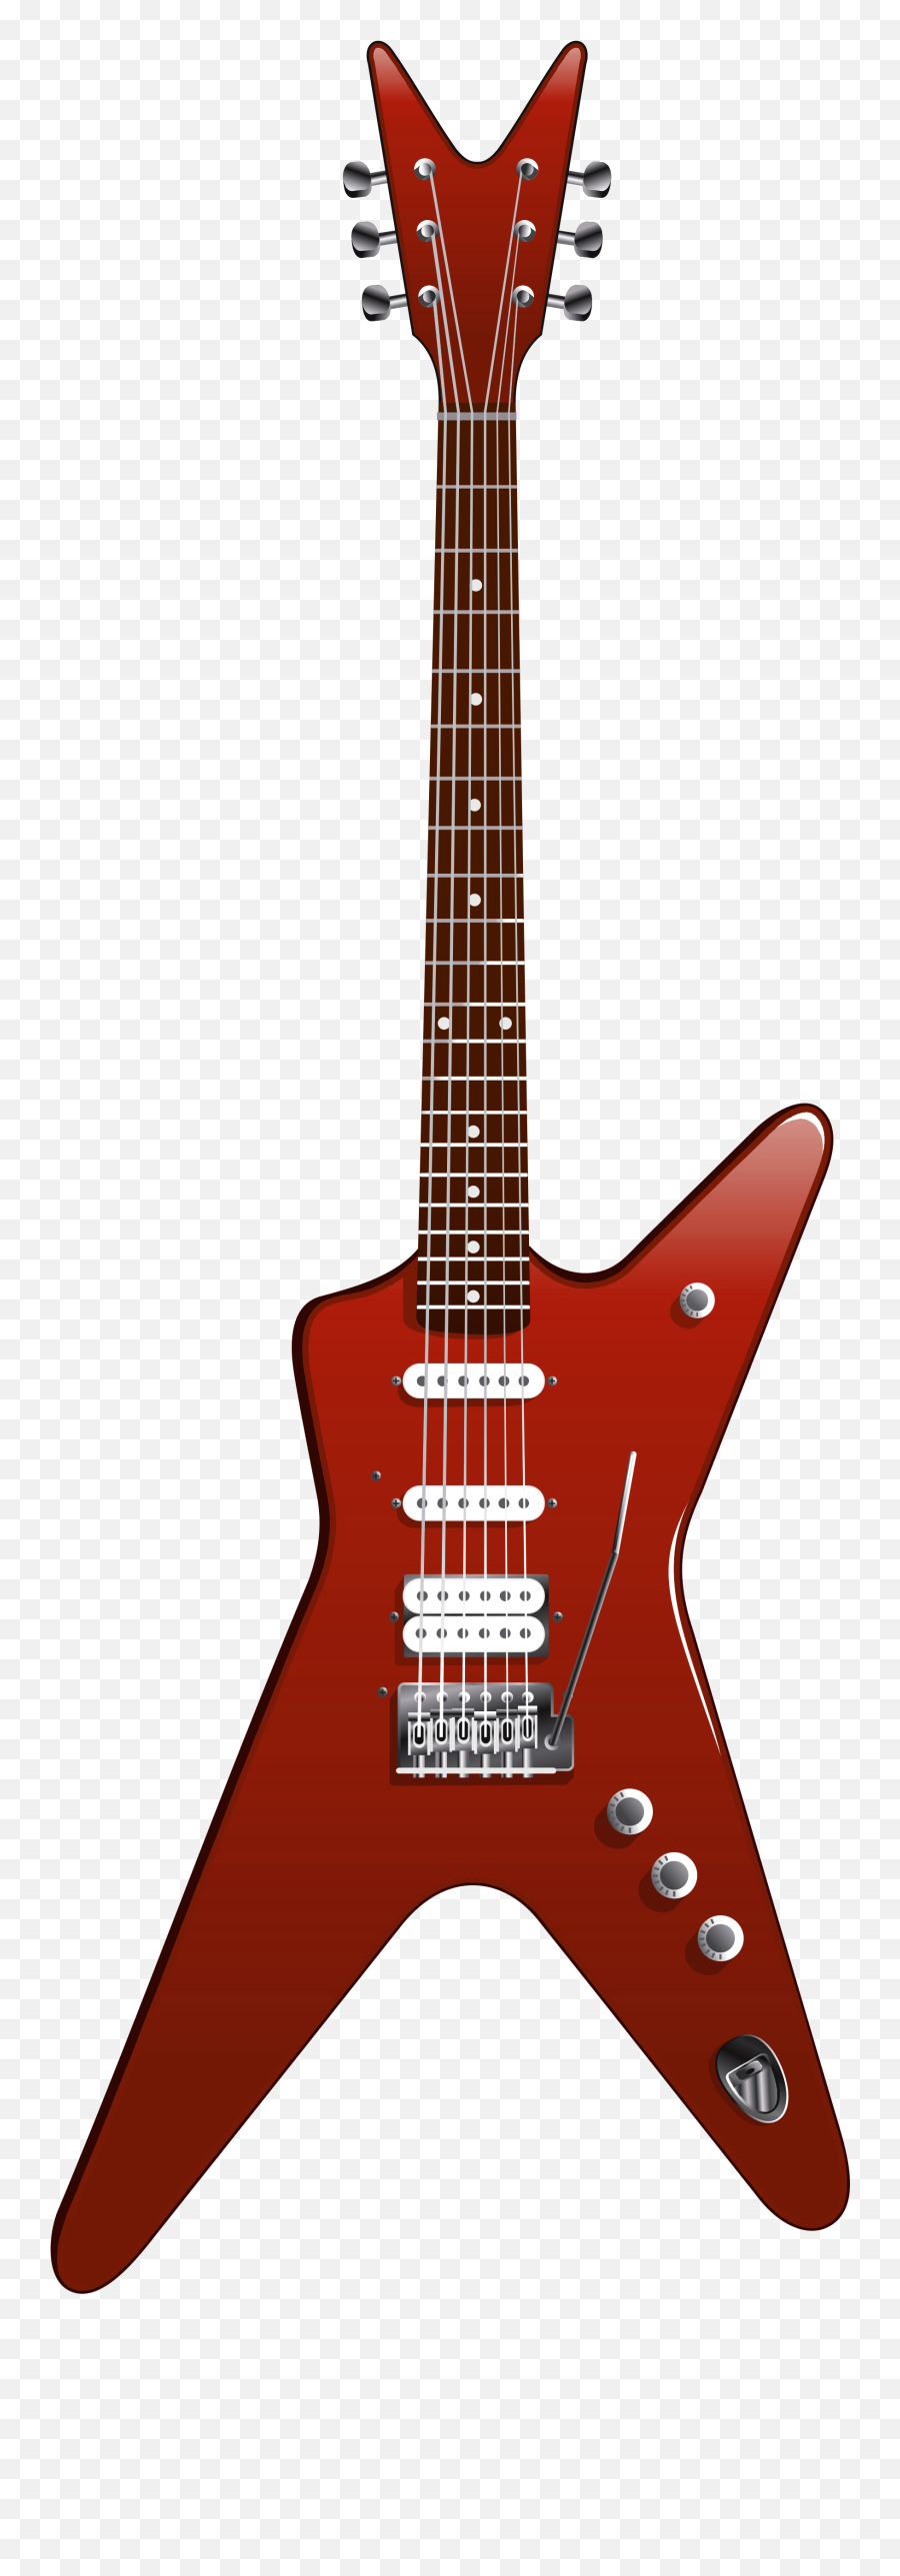 Guitar Png Clipart - Hard Rock Cafe Hollywood,Electric Guitar Png